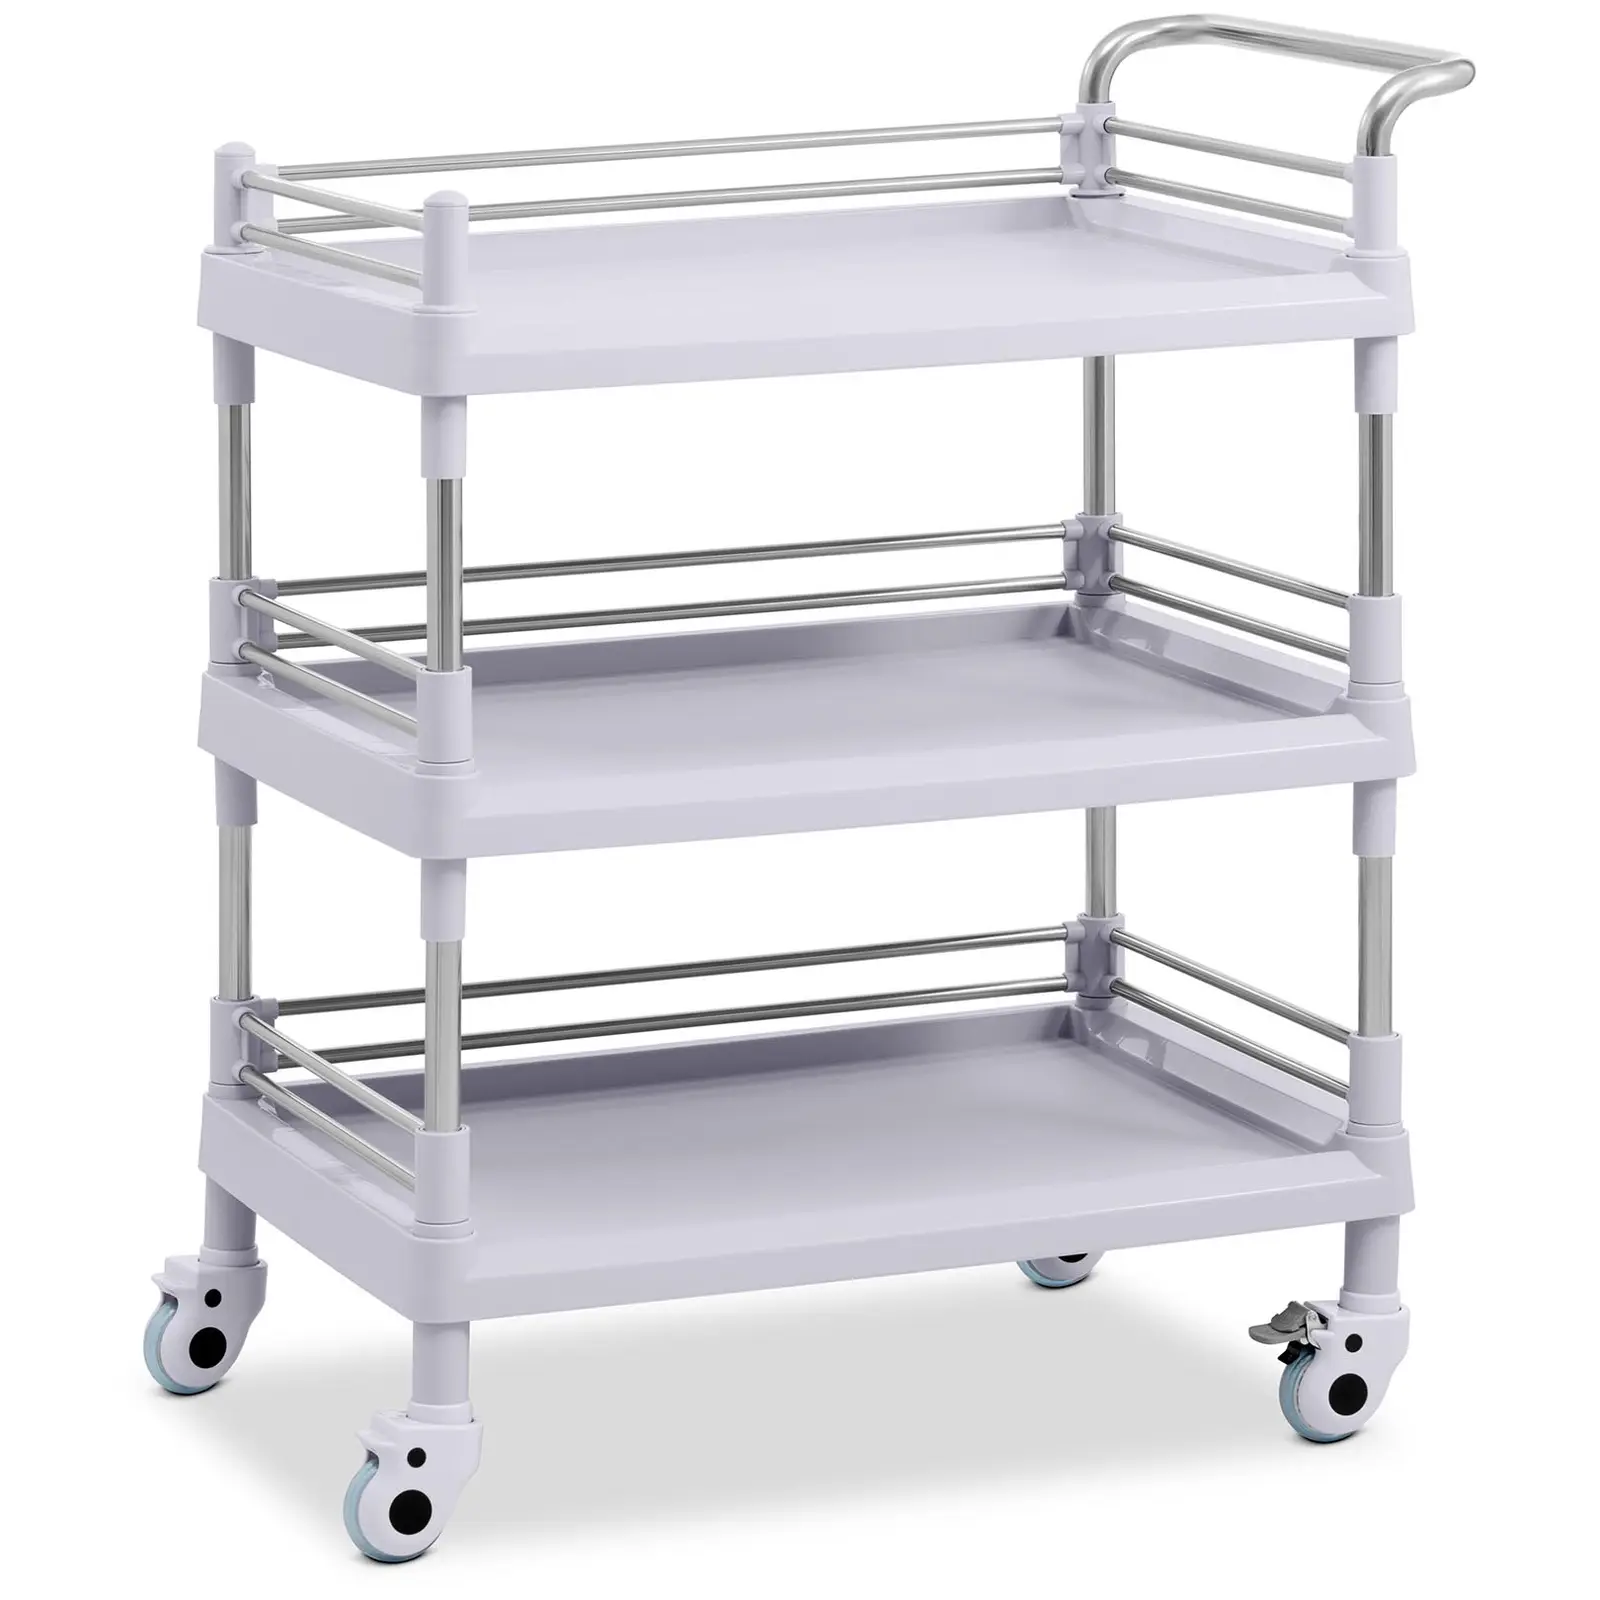 Laboratory Trolley - 3 shelves each 65 x 46 x 5 cm - 60 kg